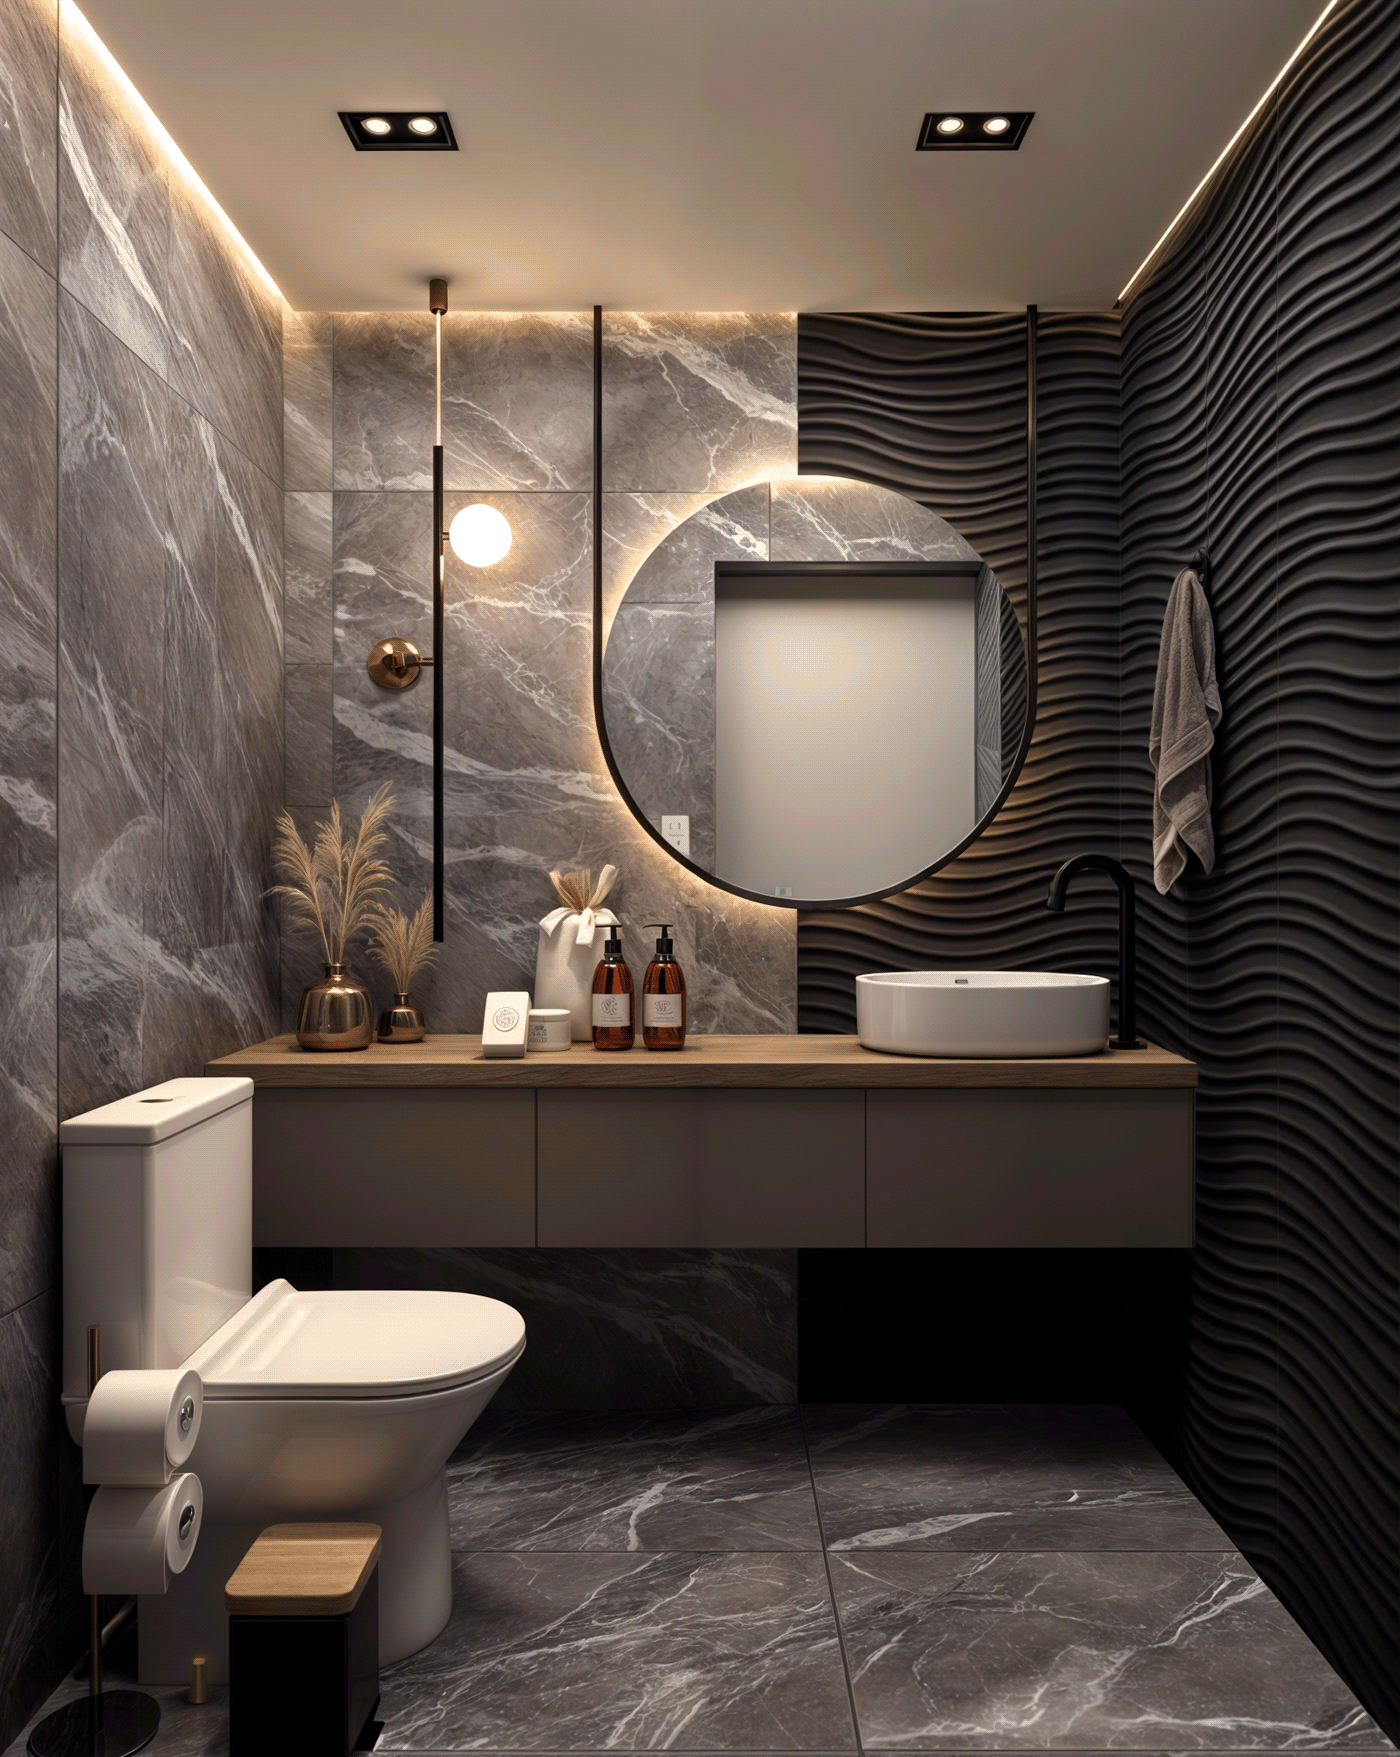 Lavabo Lavabo pequeno designinterior bedroom modern banheiro Render architecture 3D lavabodecorado